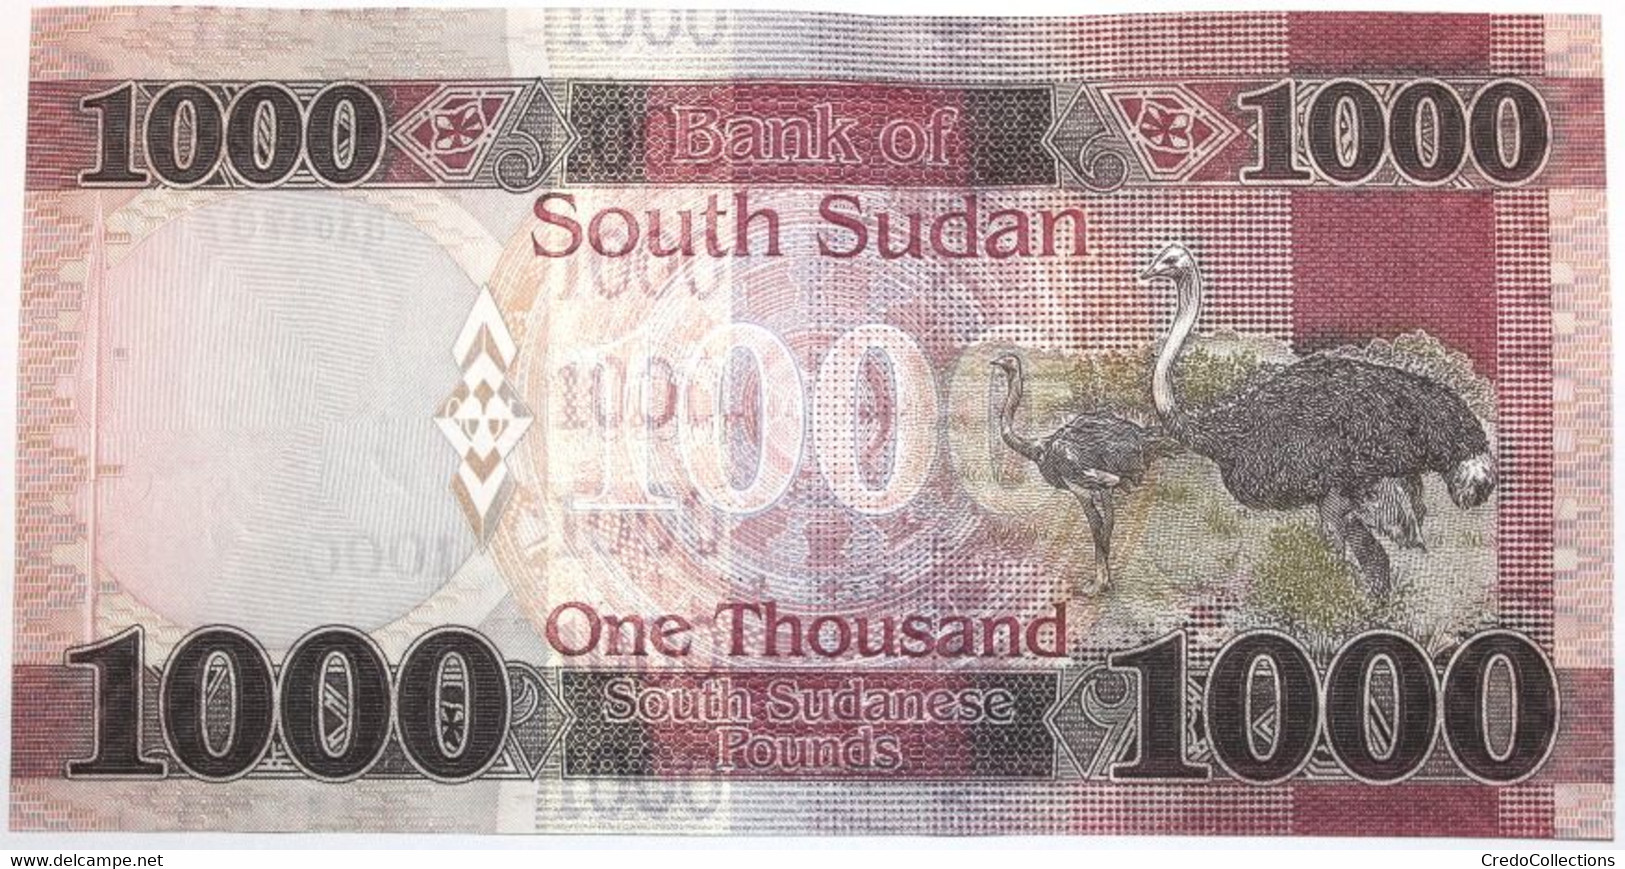 Soudan Du Sud - 1000 Pounds - 2020 - PICK NEW20 - NEUF - Zuid-Soedan